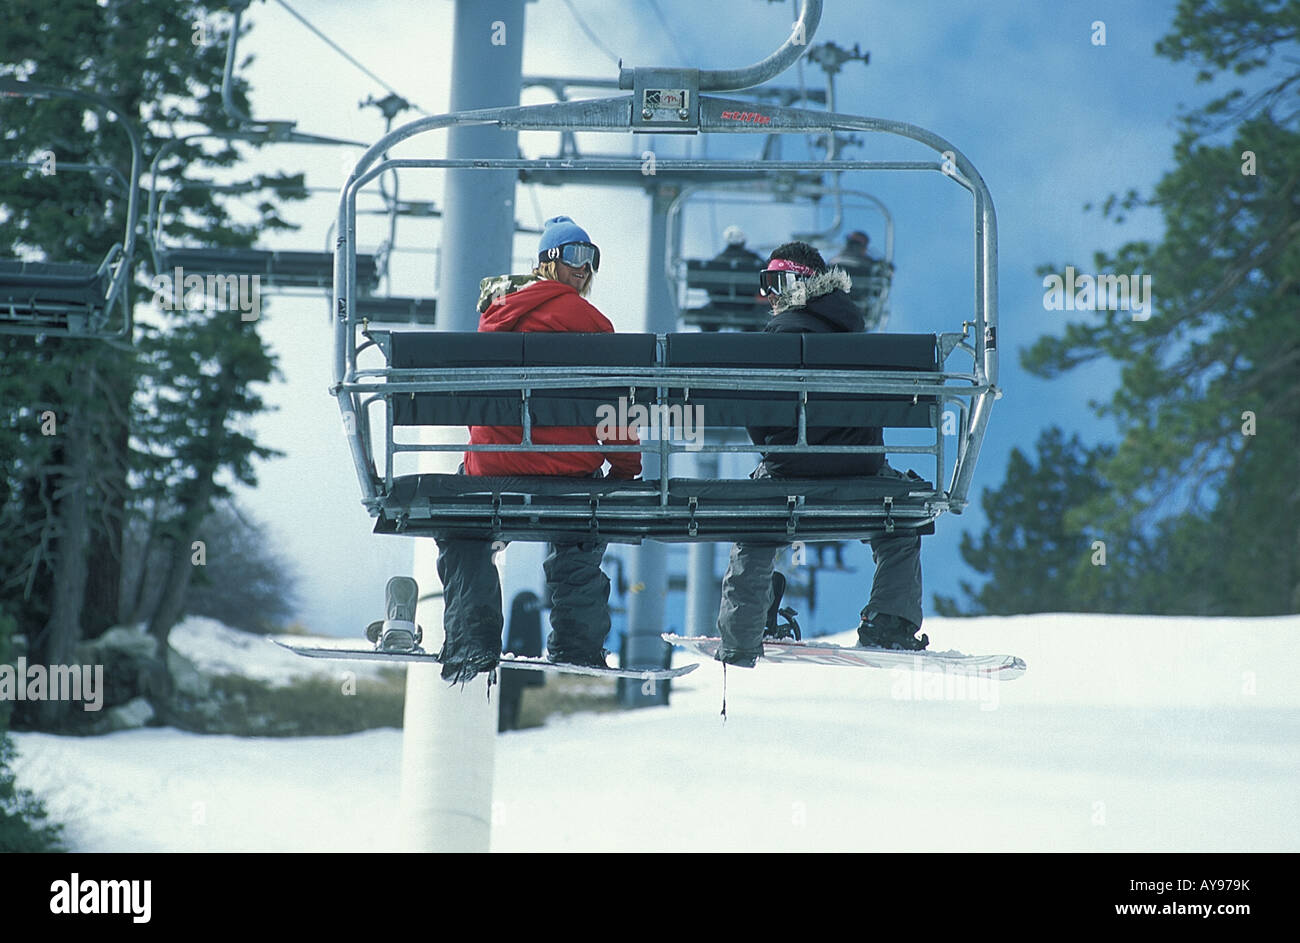 Snowboarders On Chair Lift Big Bear California Stock Photo